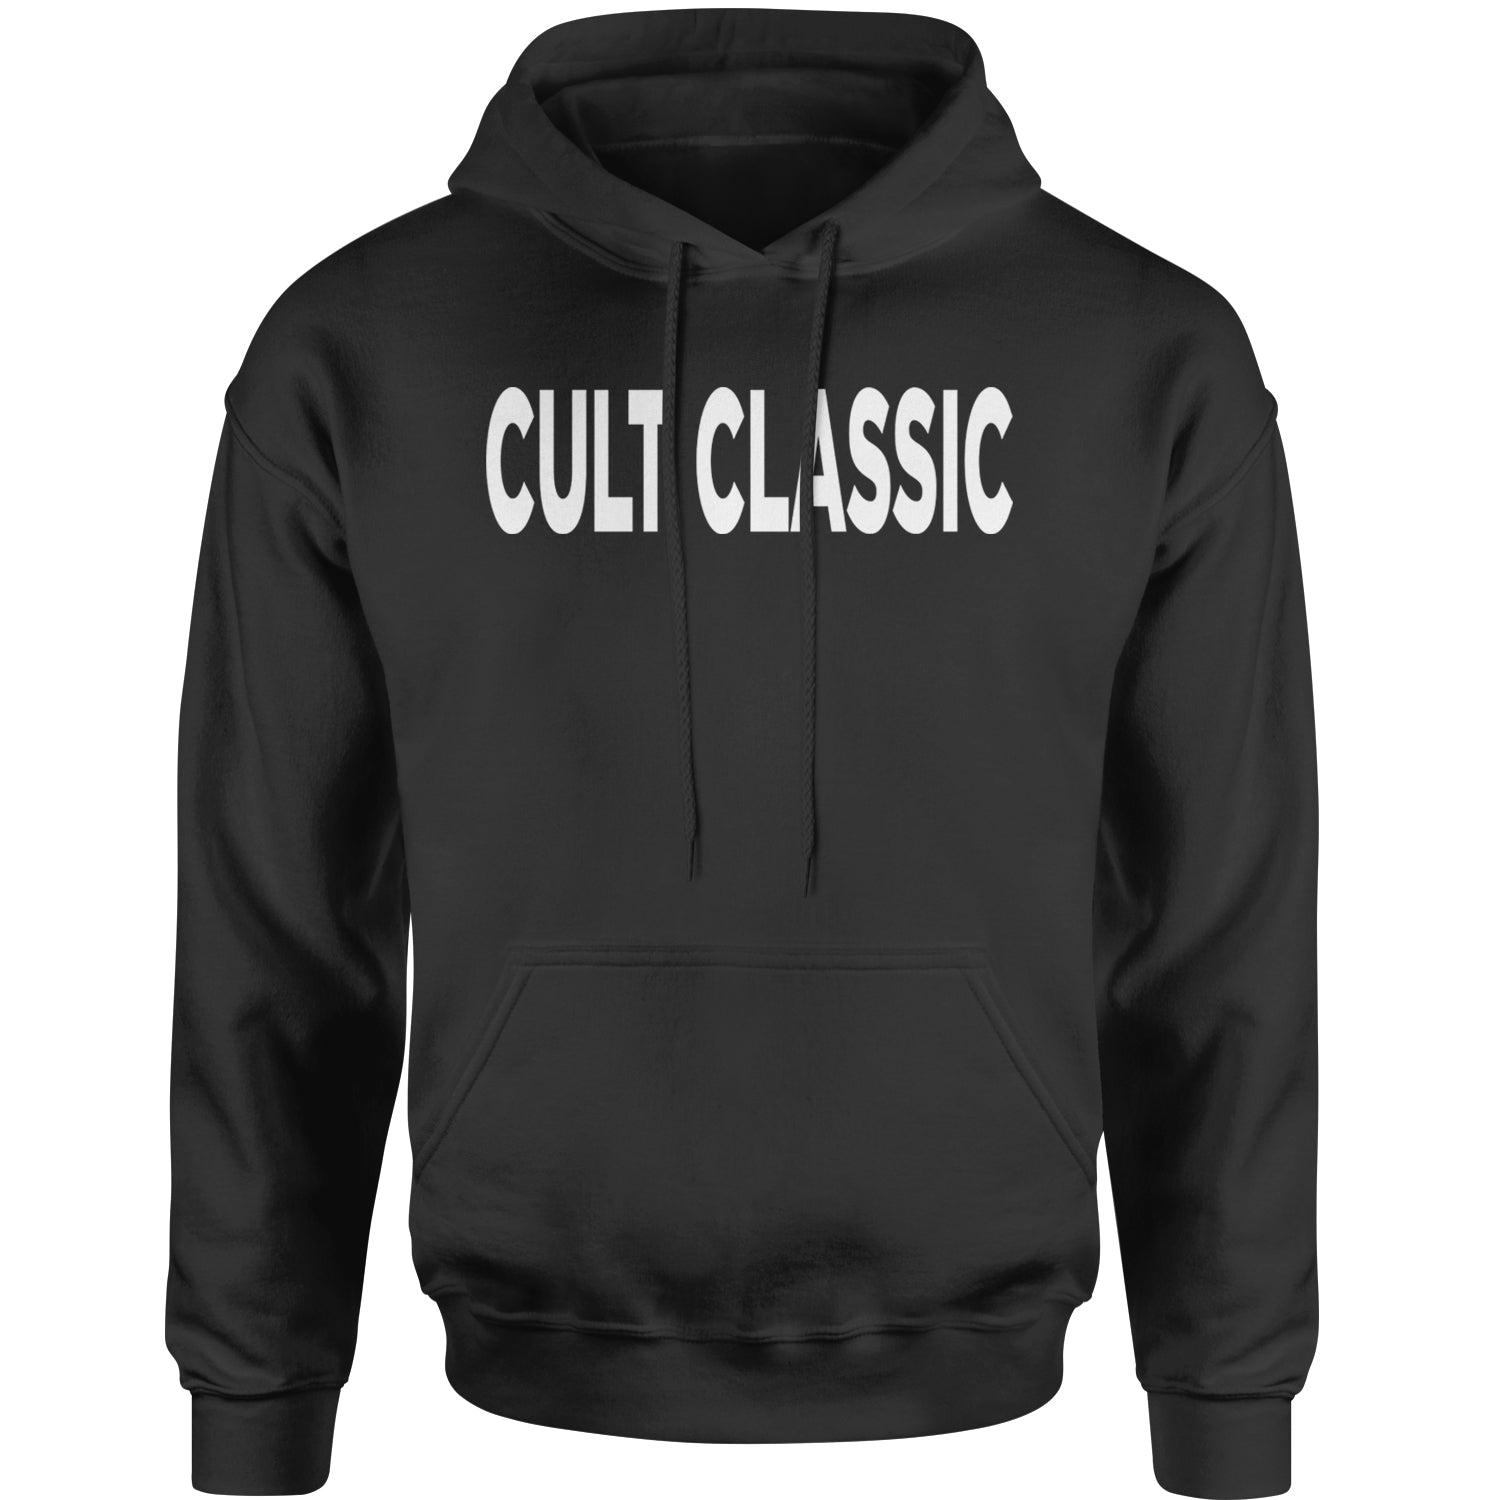 Cult Classic Party Girl Brat Adult Hoodie Sweatshirt